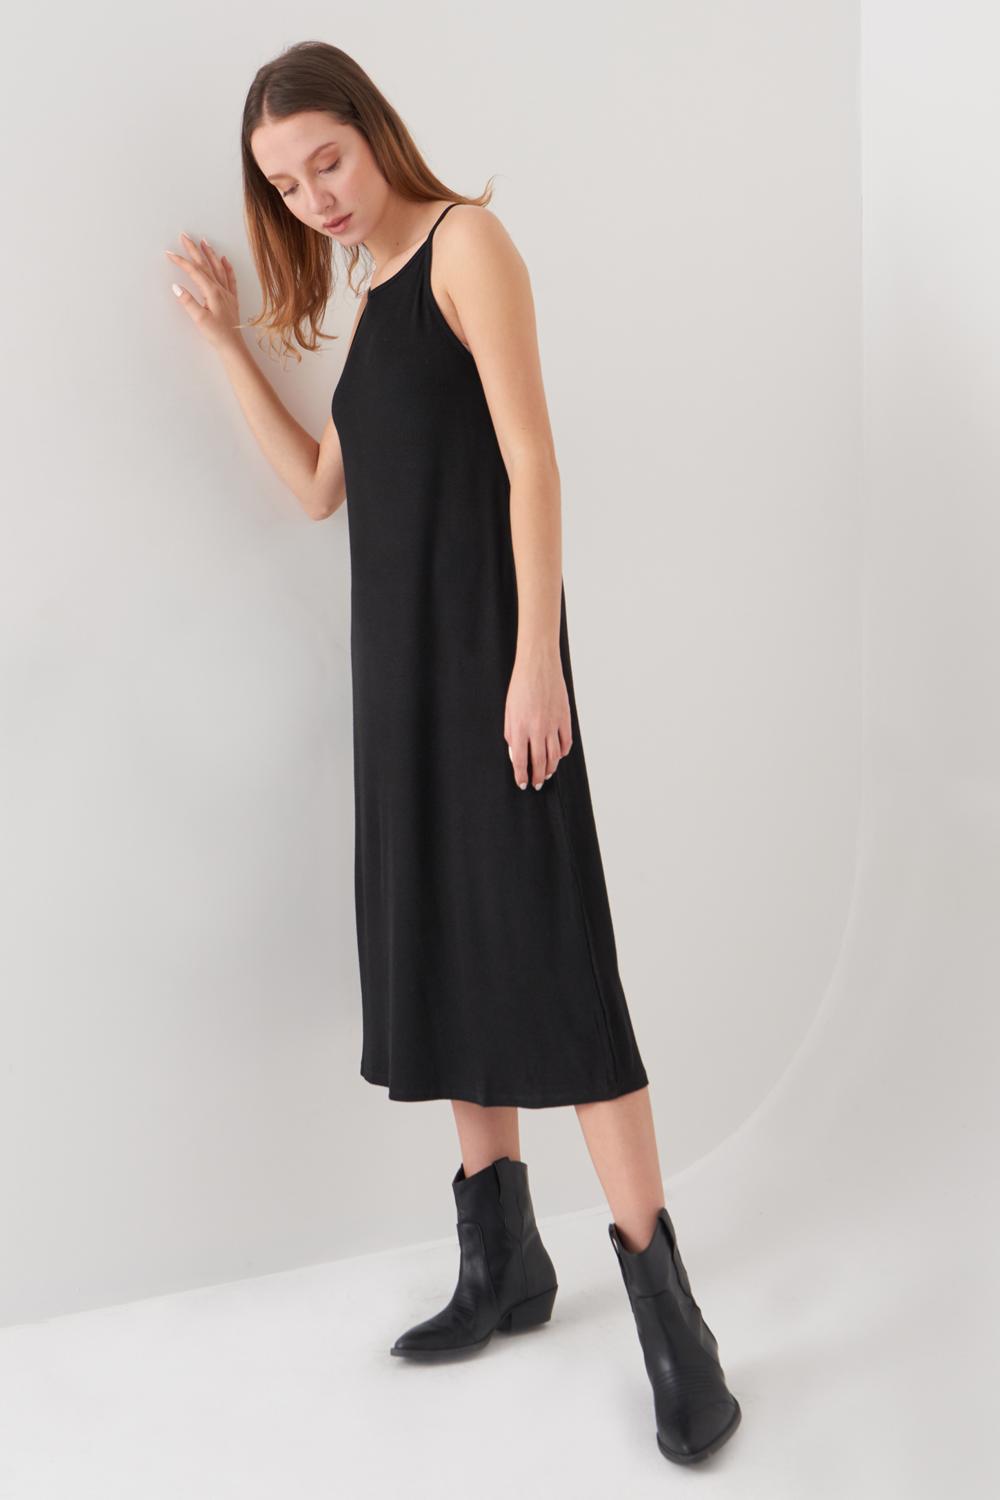 Siyah İnce Askılı Elbise E0999 – E10